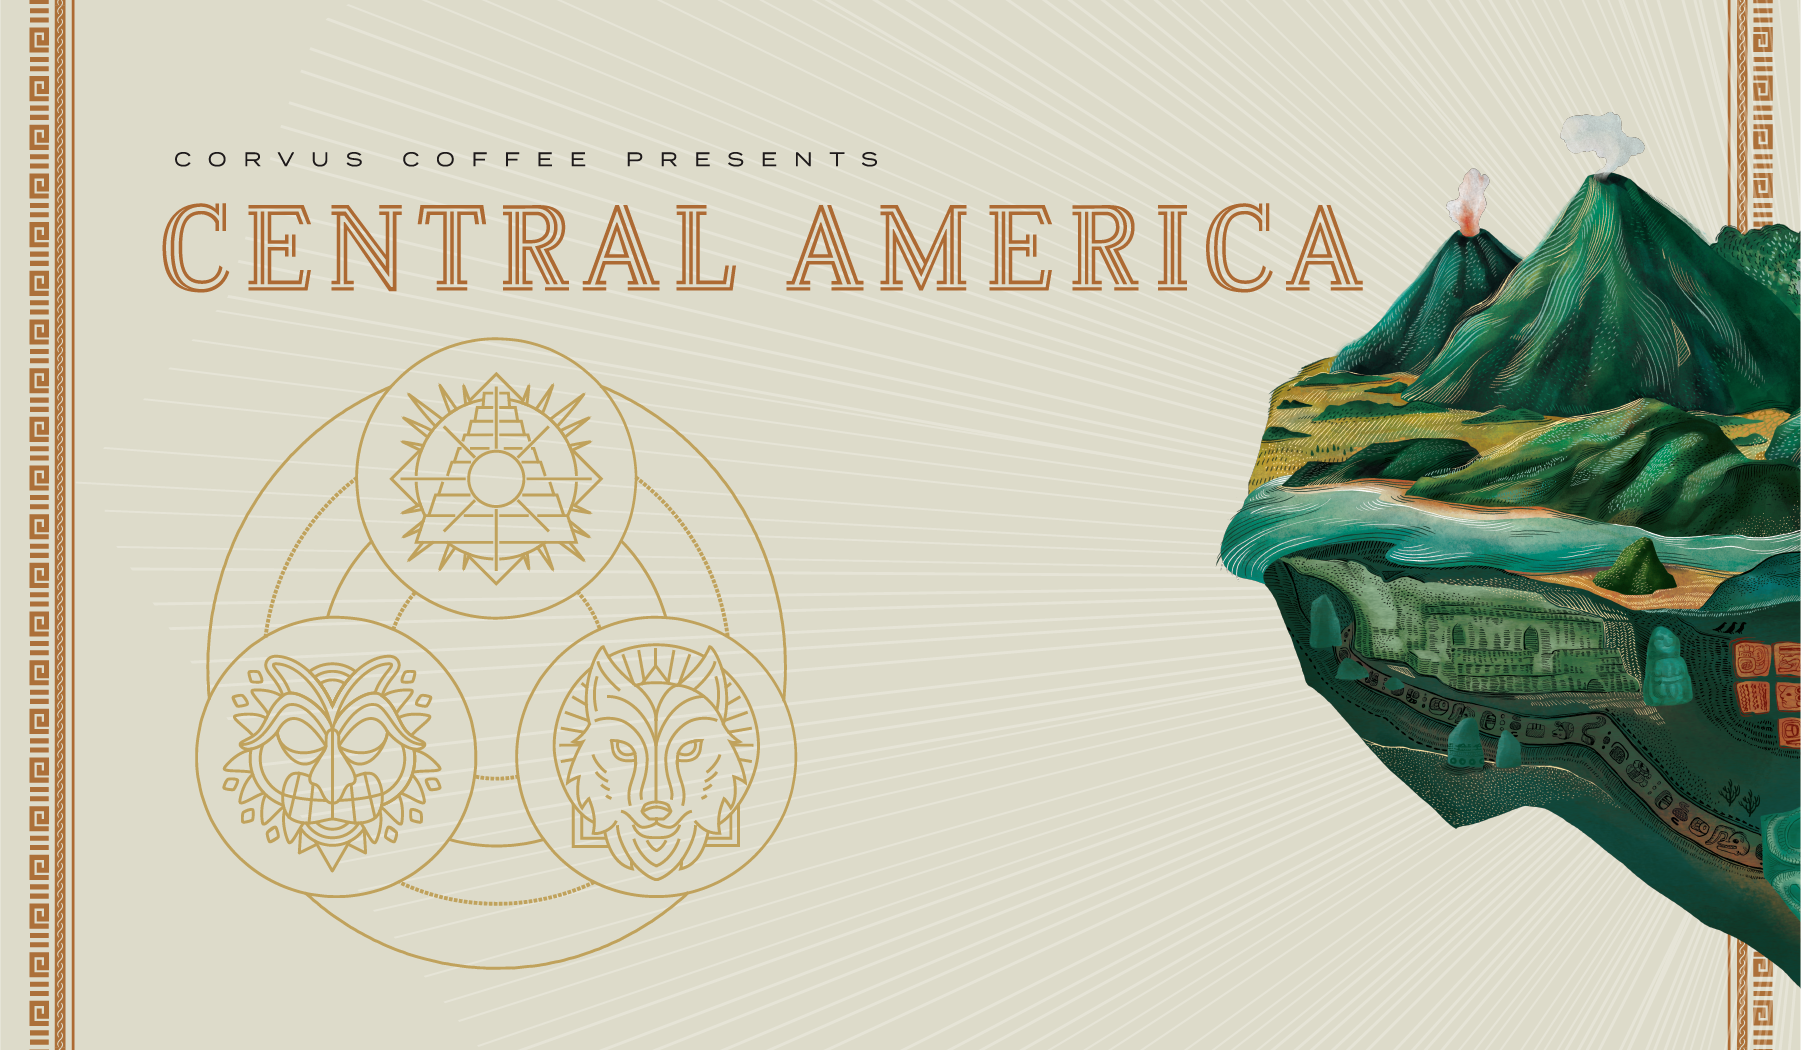 The Central American journey - starting September